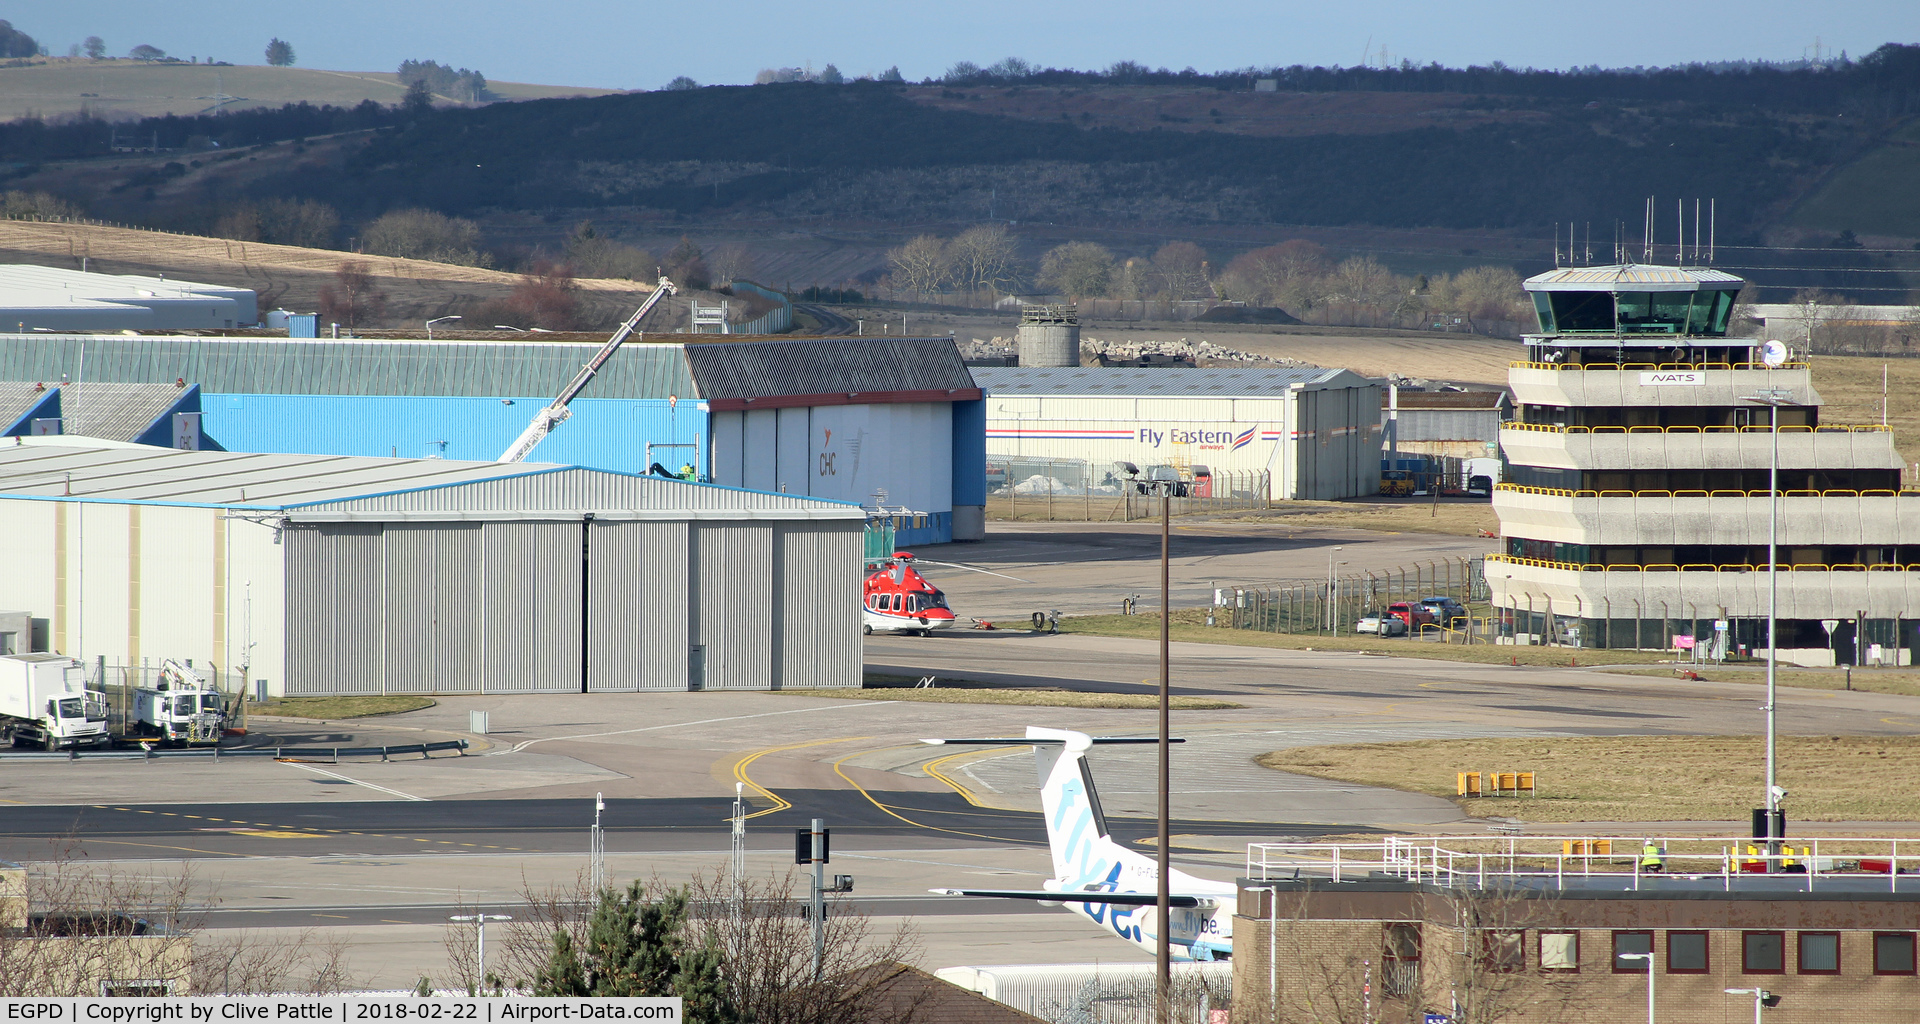 Aberdeen Airport, Aberdeen, Scotland United Kingdom (EGPD) - Airport view